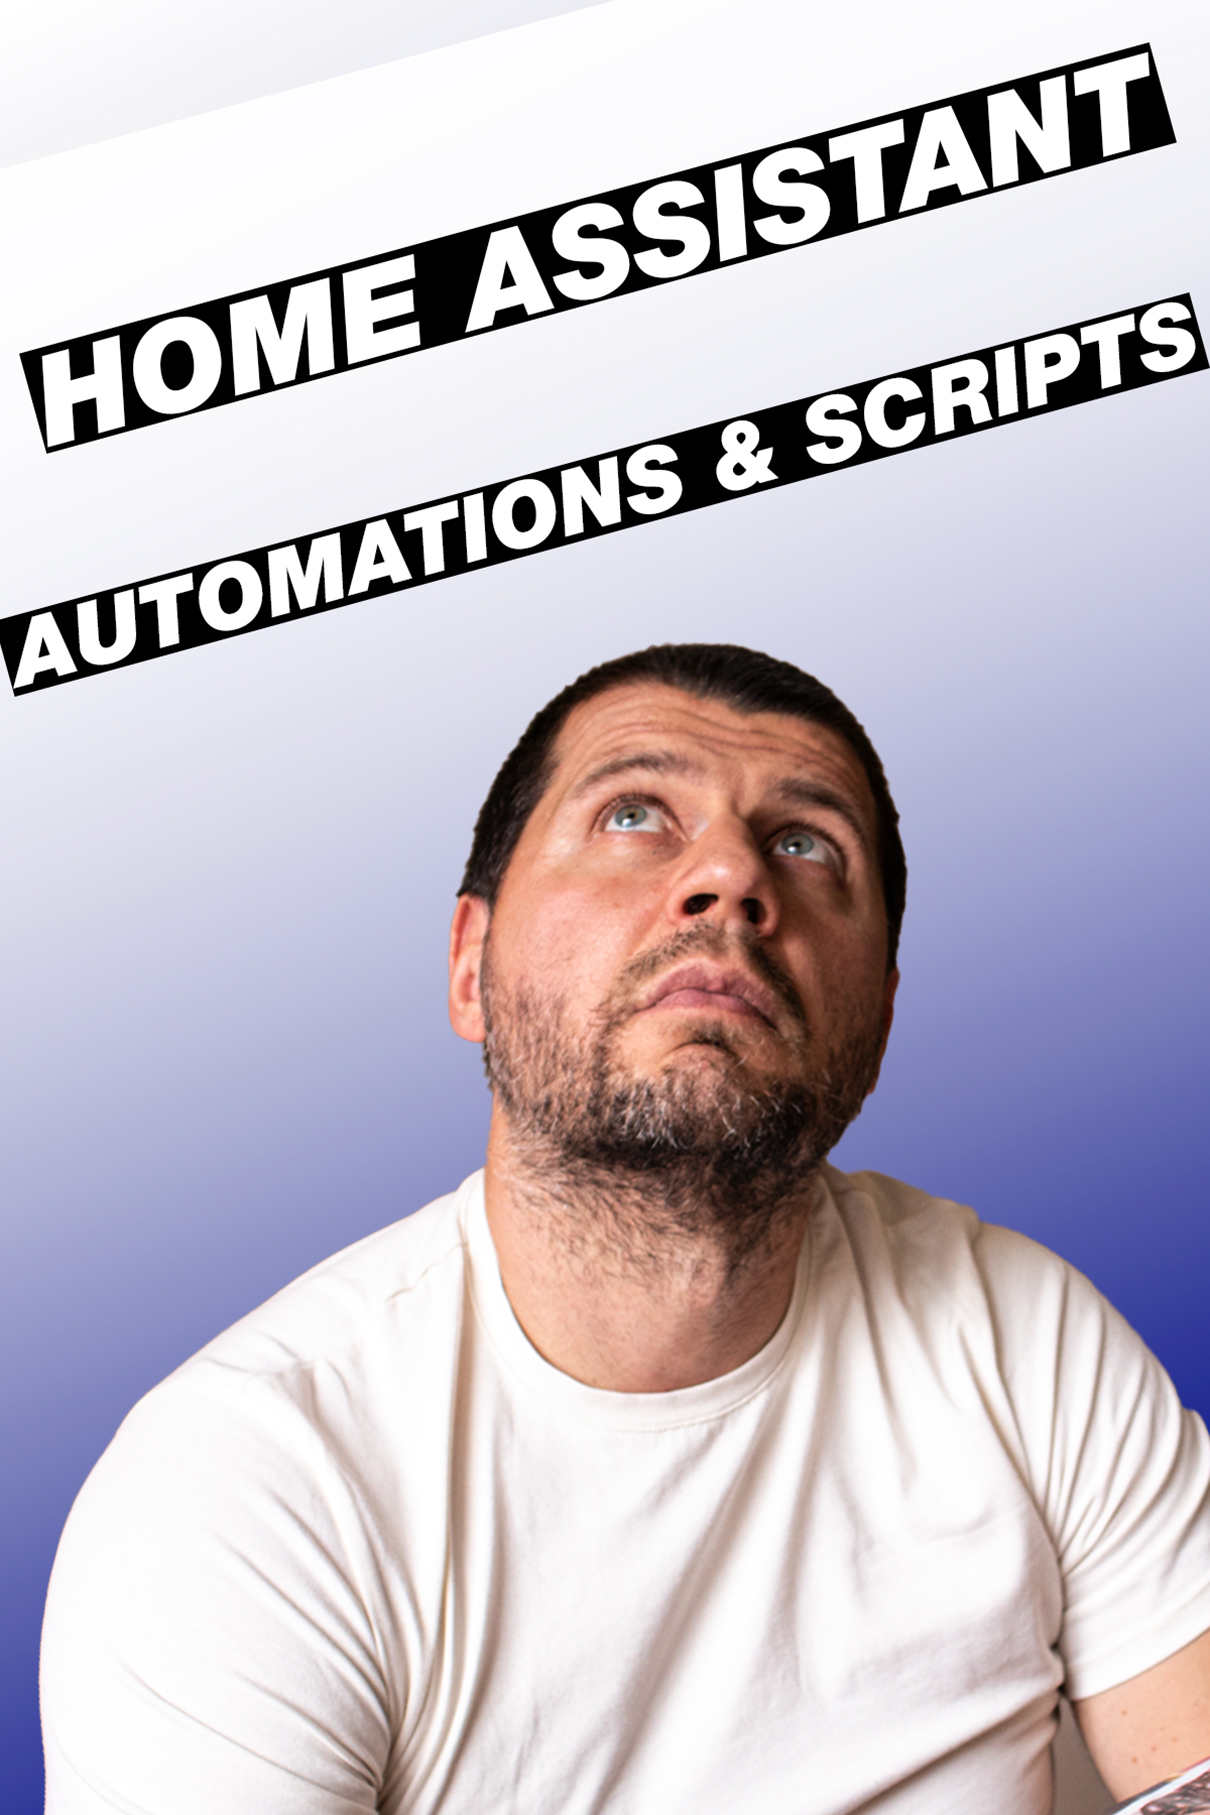 home-assistant-automations-scripts-kiril-peyanski-s-blog